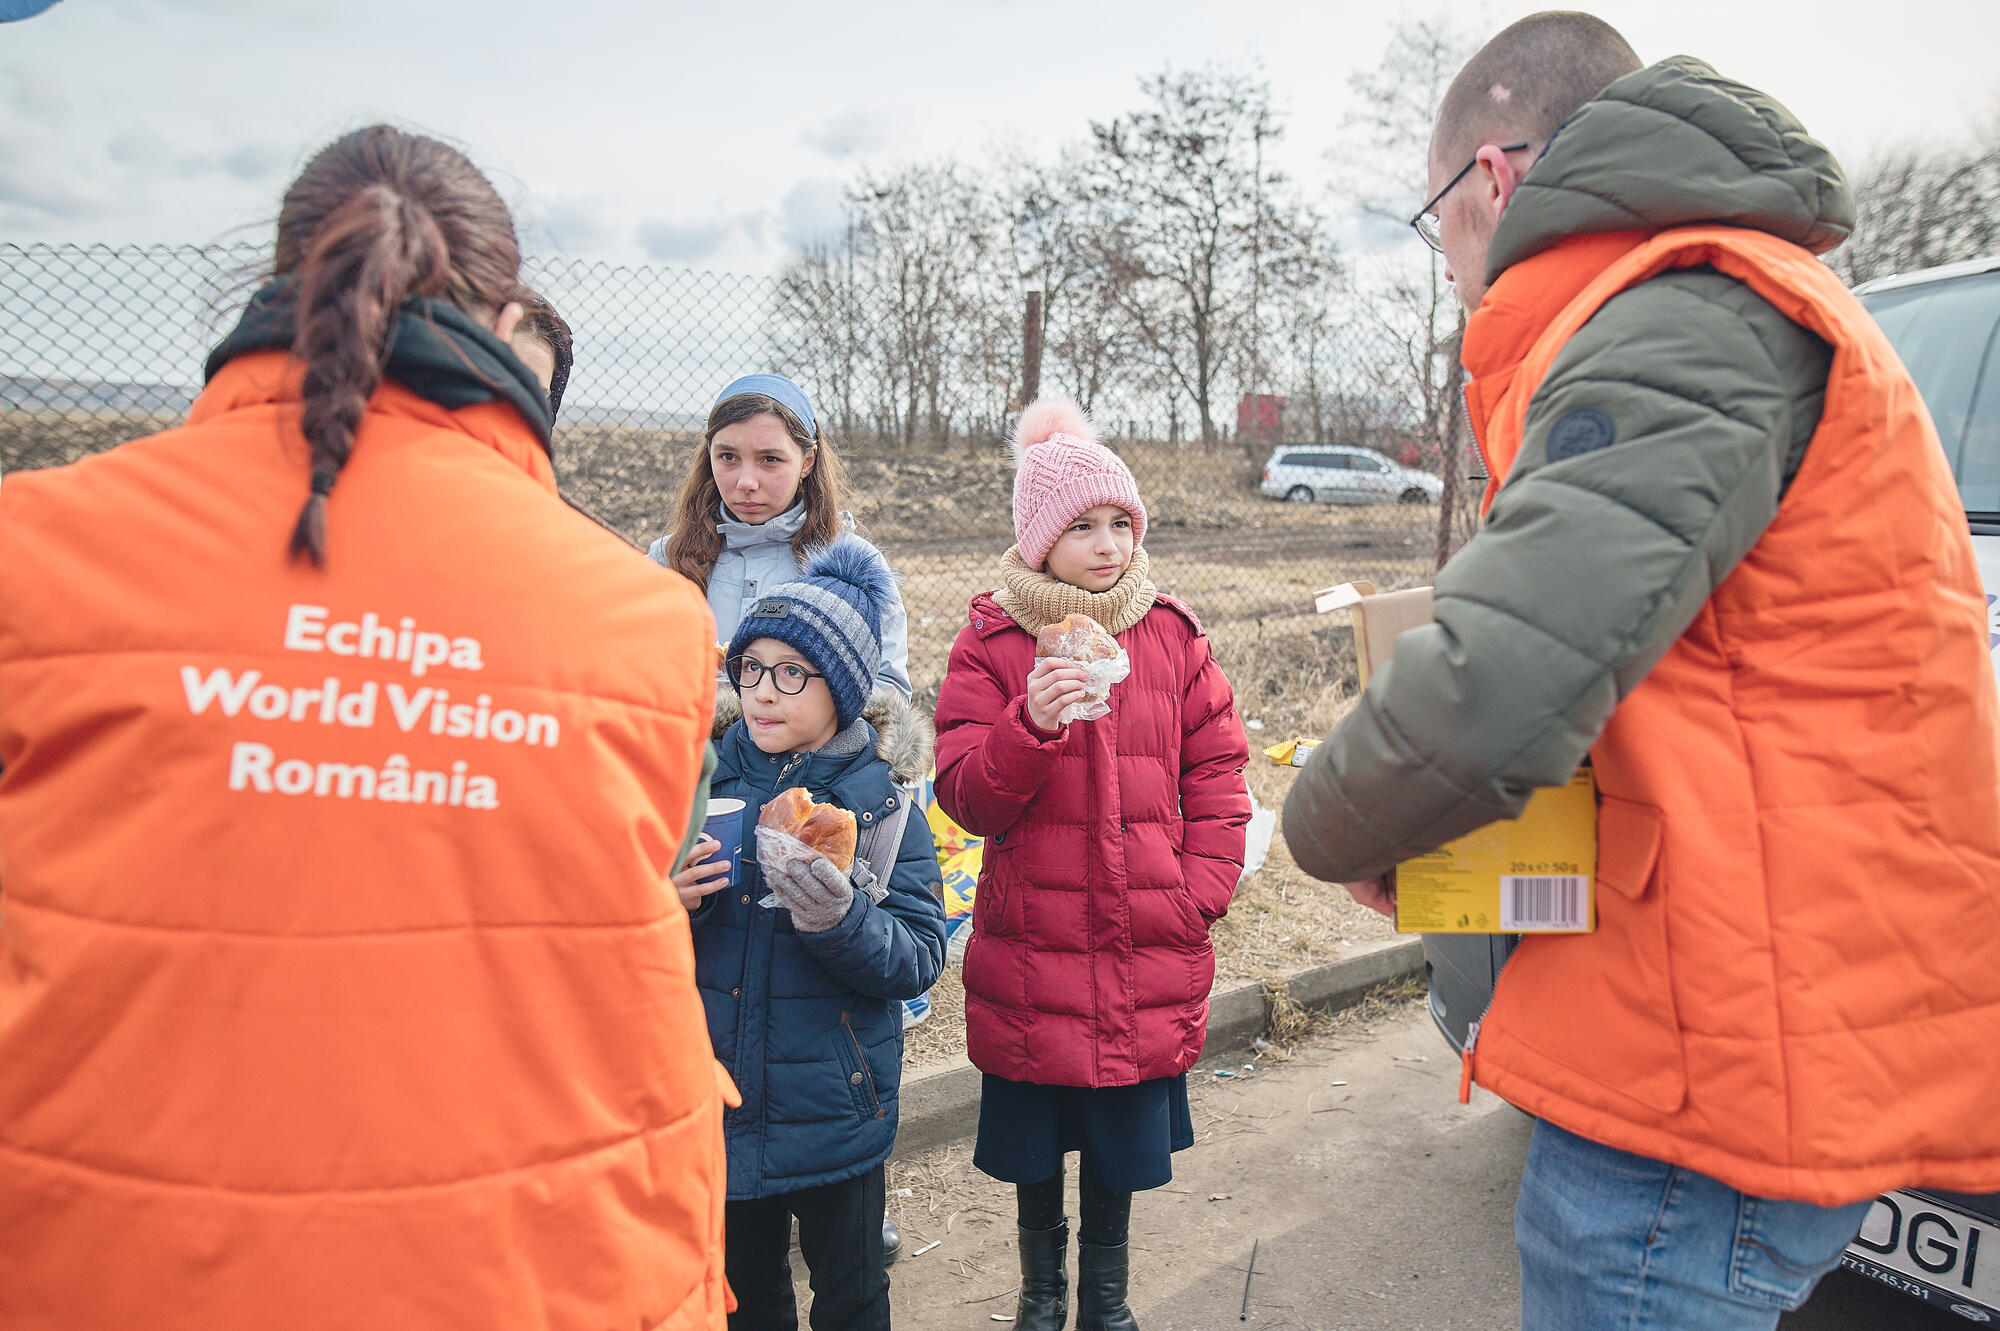 World Vision Romania staff speak to children on the border